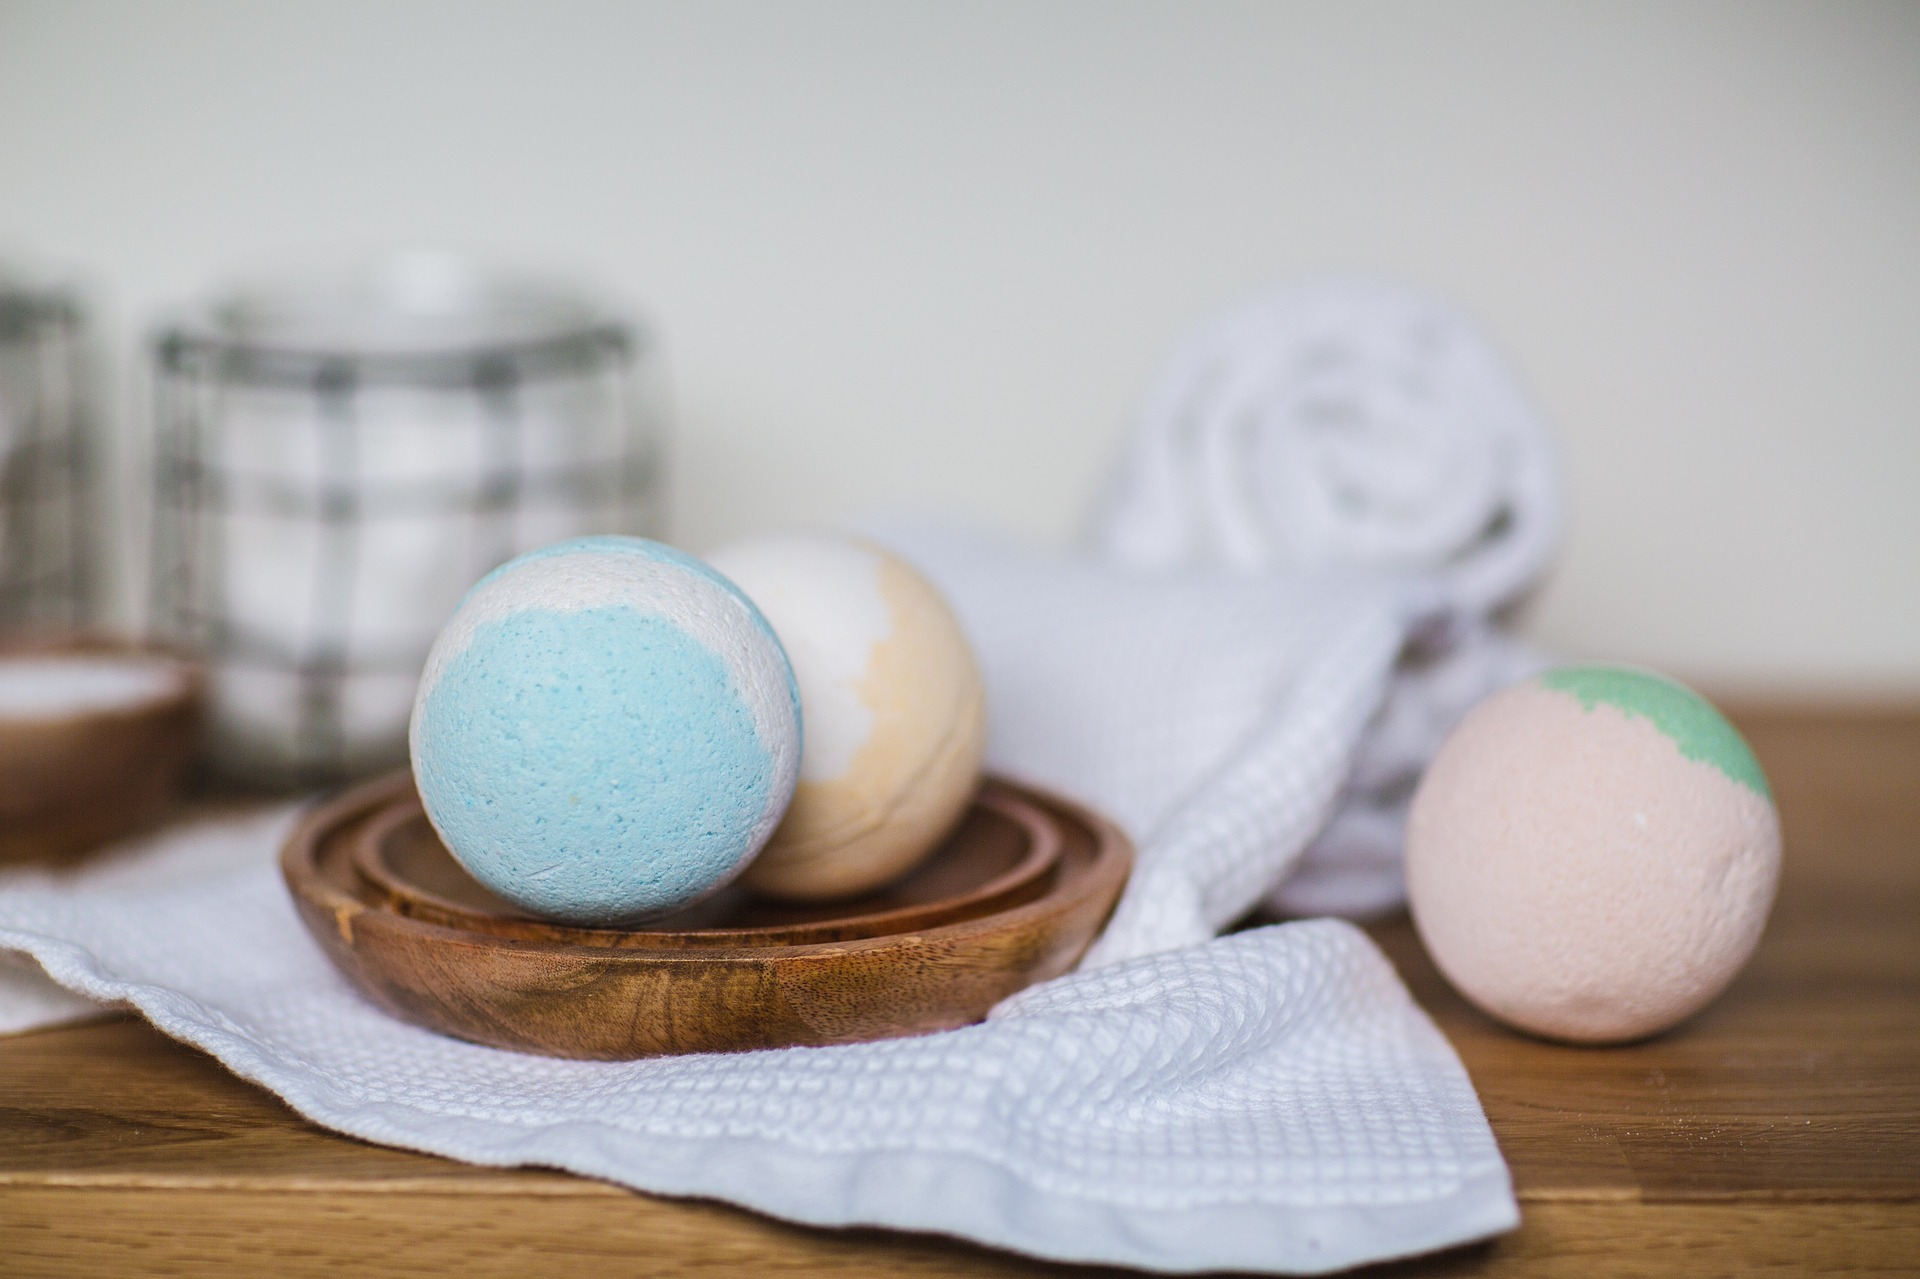 How to prepare bath balls yourself?